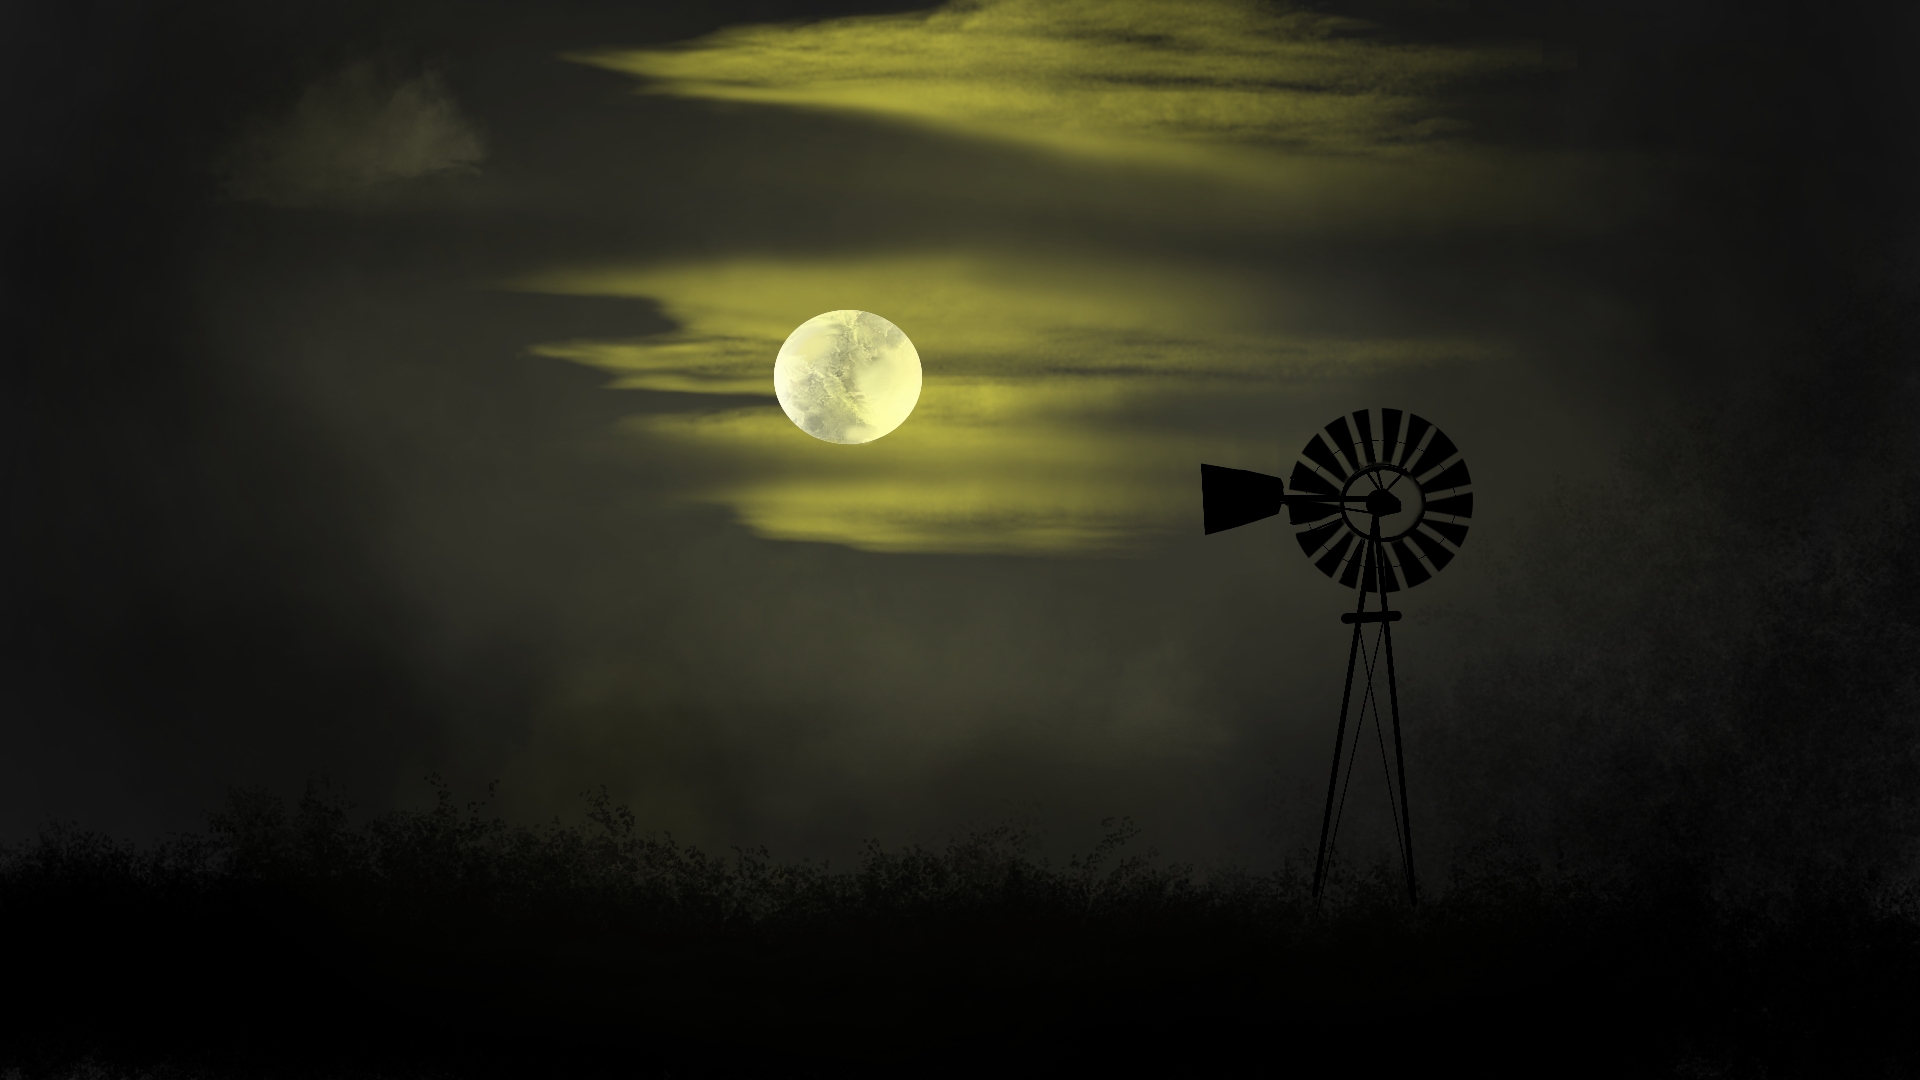 Digital Painting Digital Art Landscape Windmill Moonlight 1920x1080